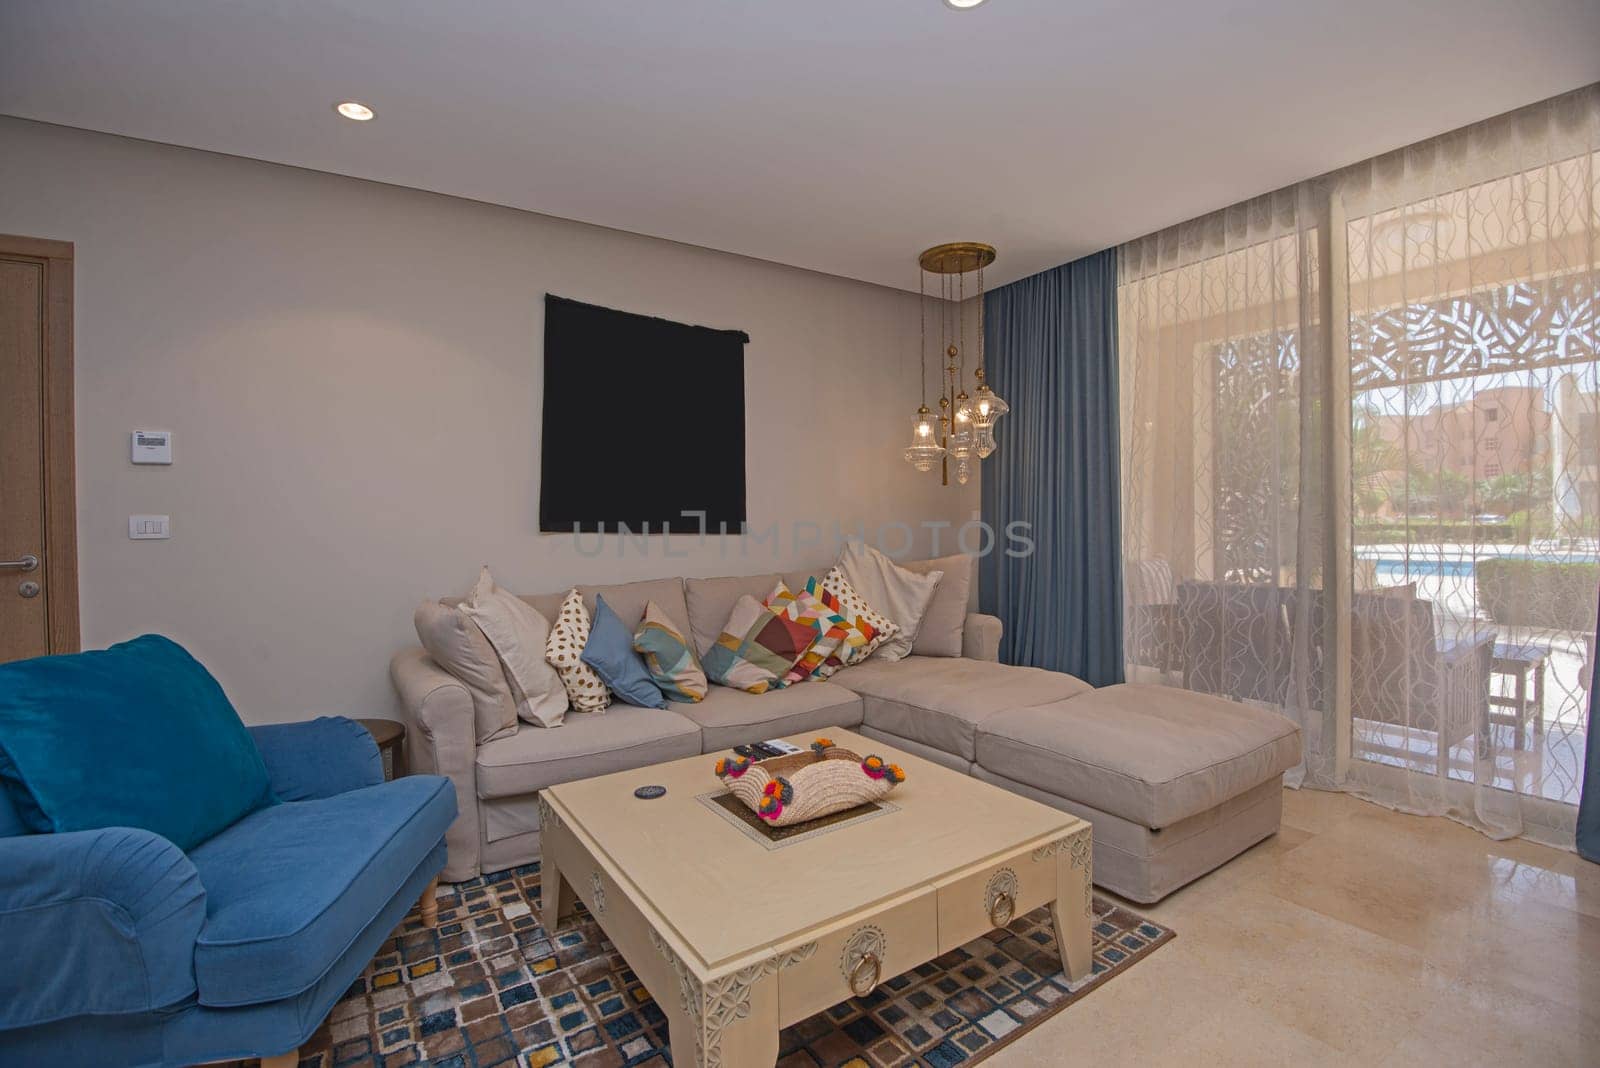 Interior design of luxury apartment living room with patio by paulvinten